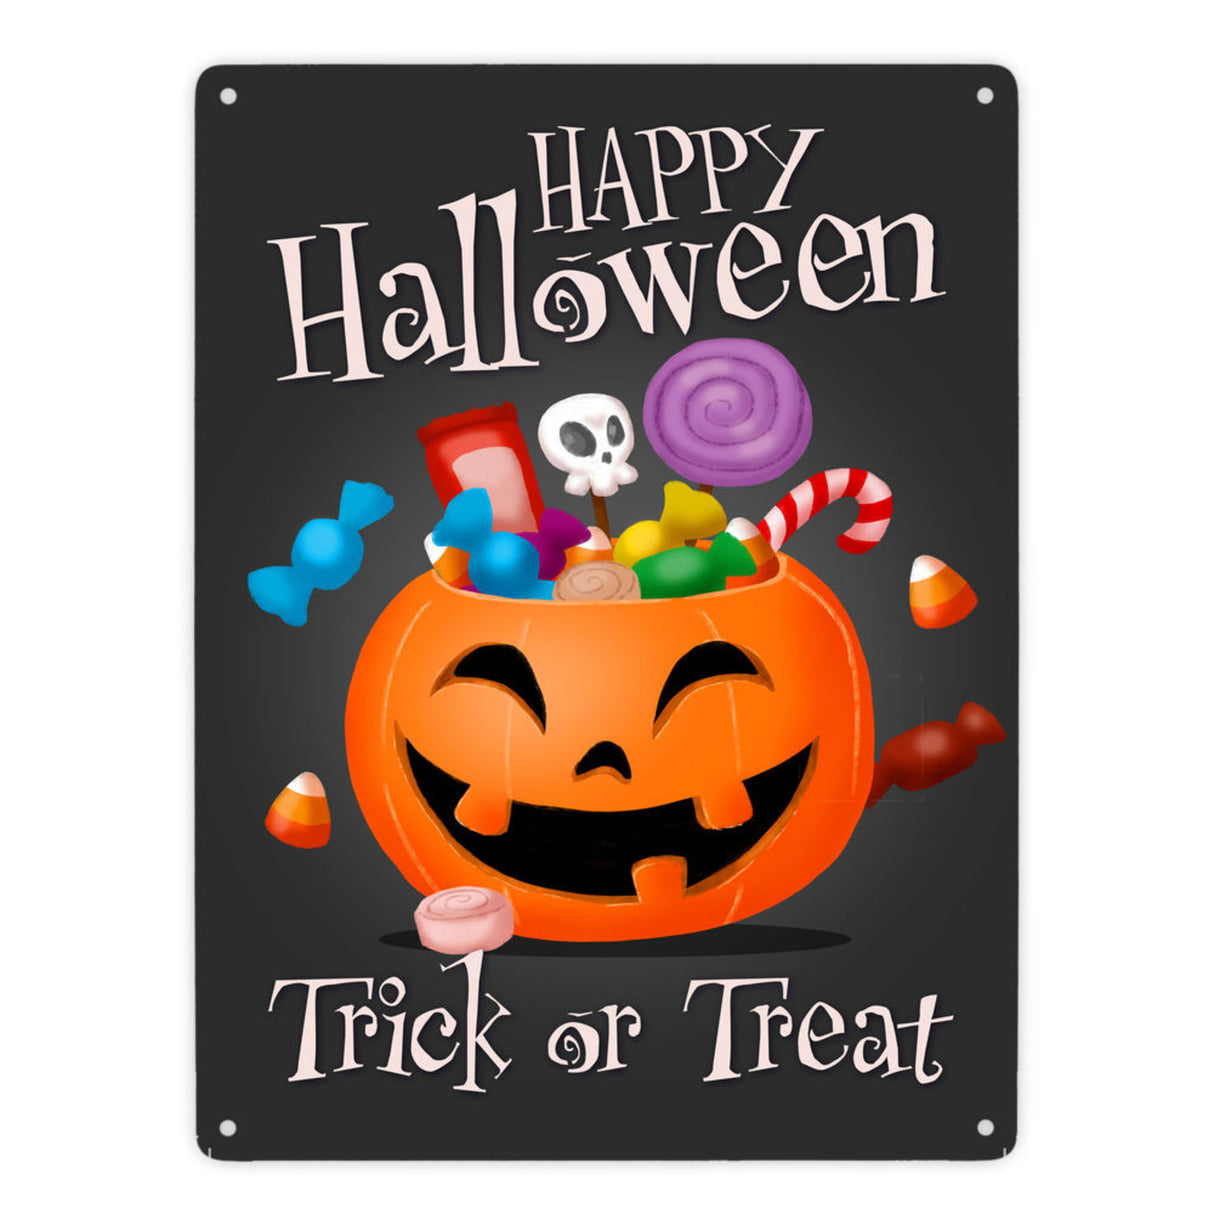 Happy Halloween Trick or Treat Metallschild in lila mit süßem Kürbis